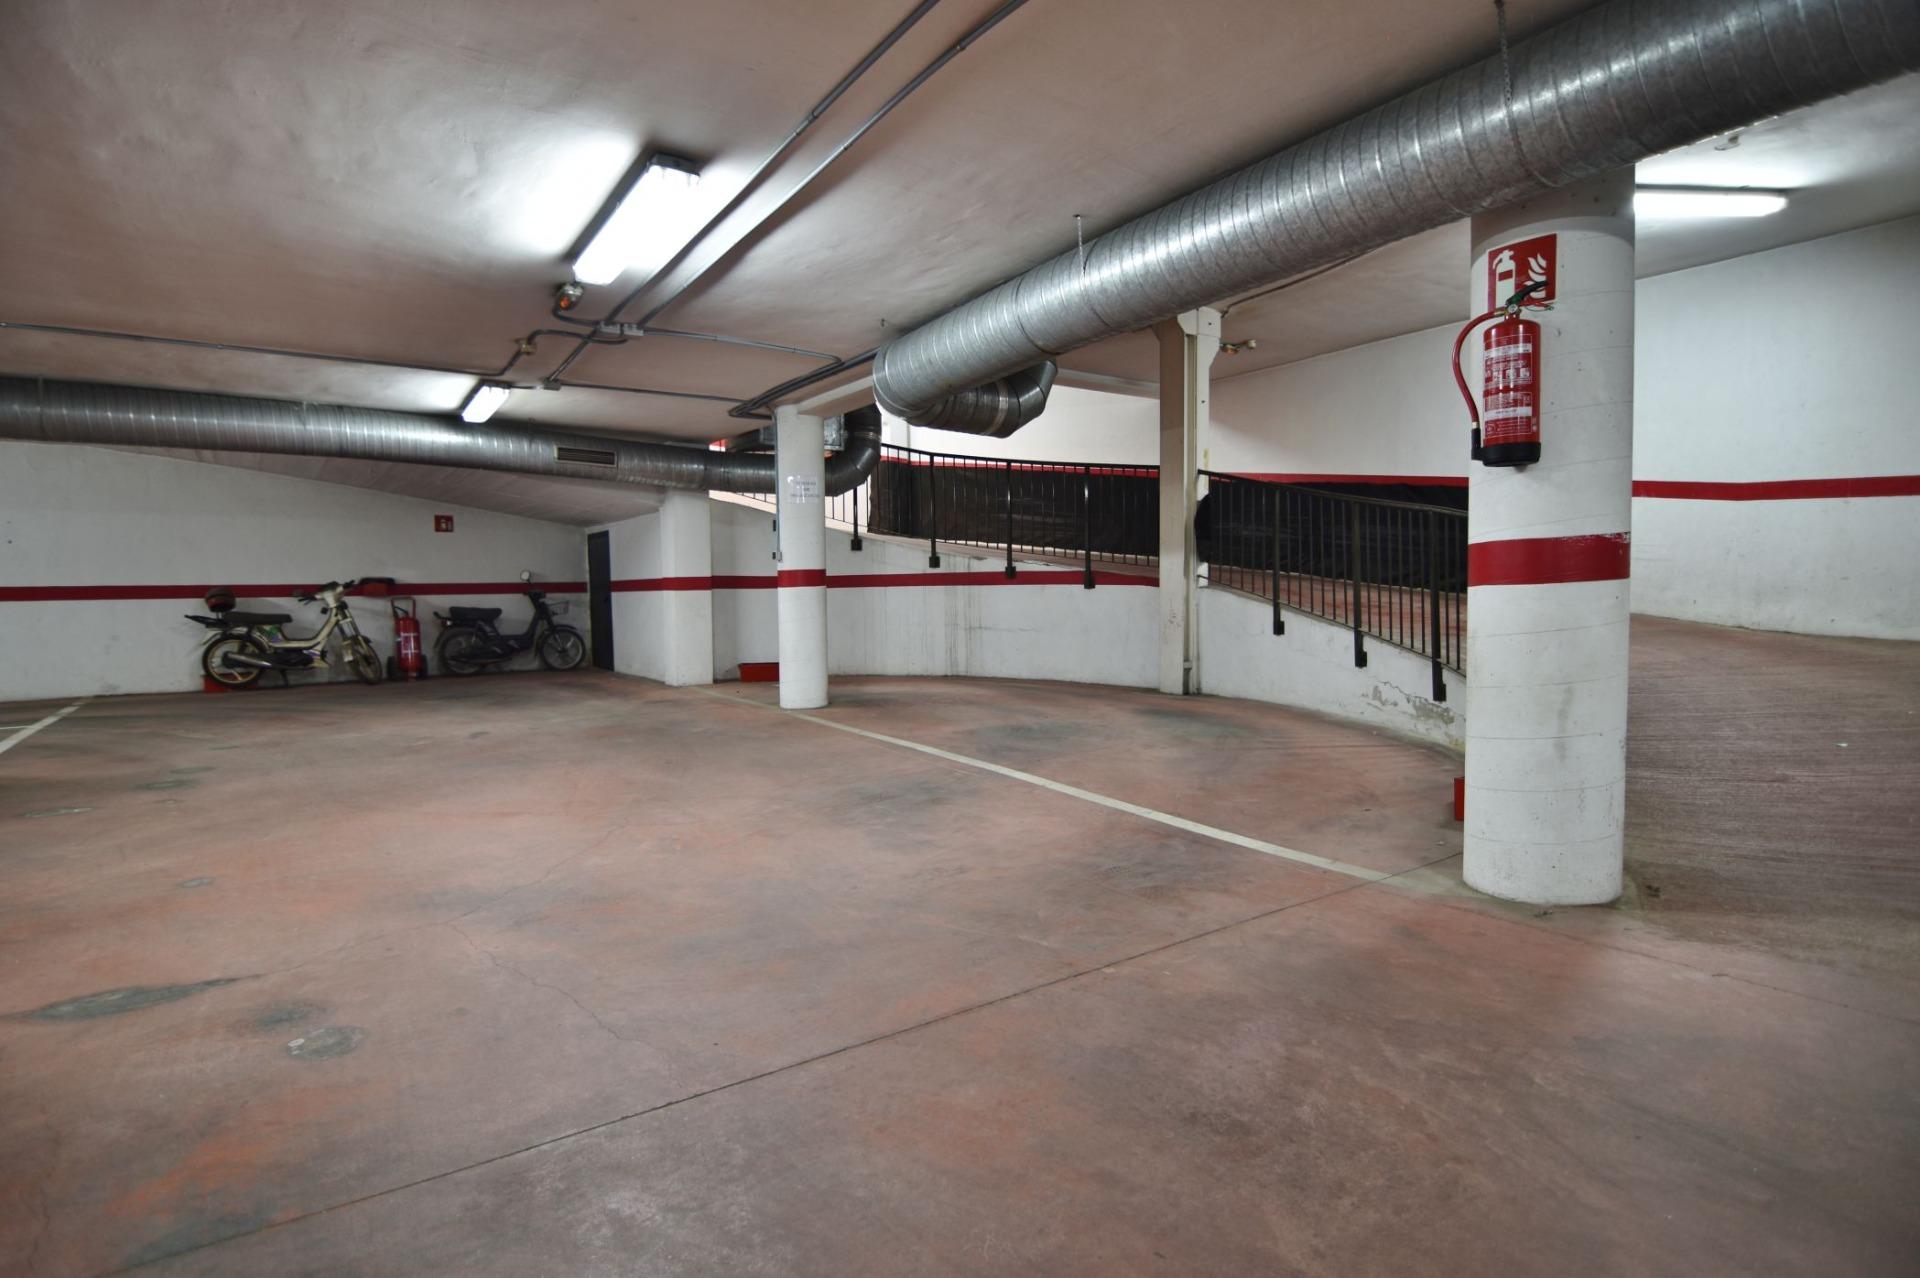 Se alquila plaza de garaje en el Alquian